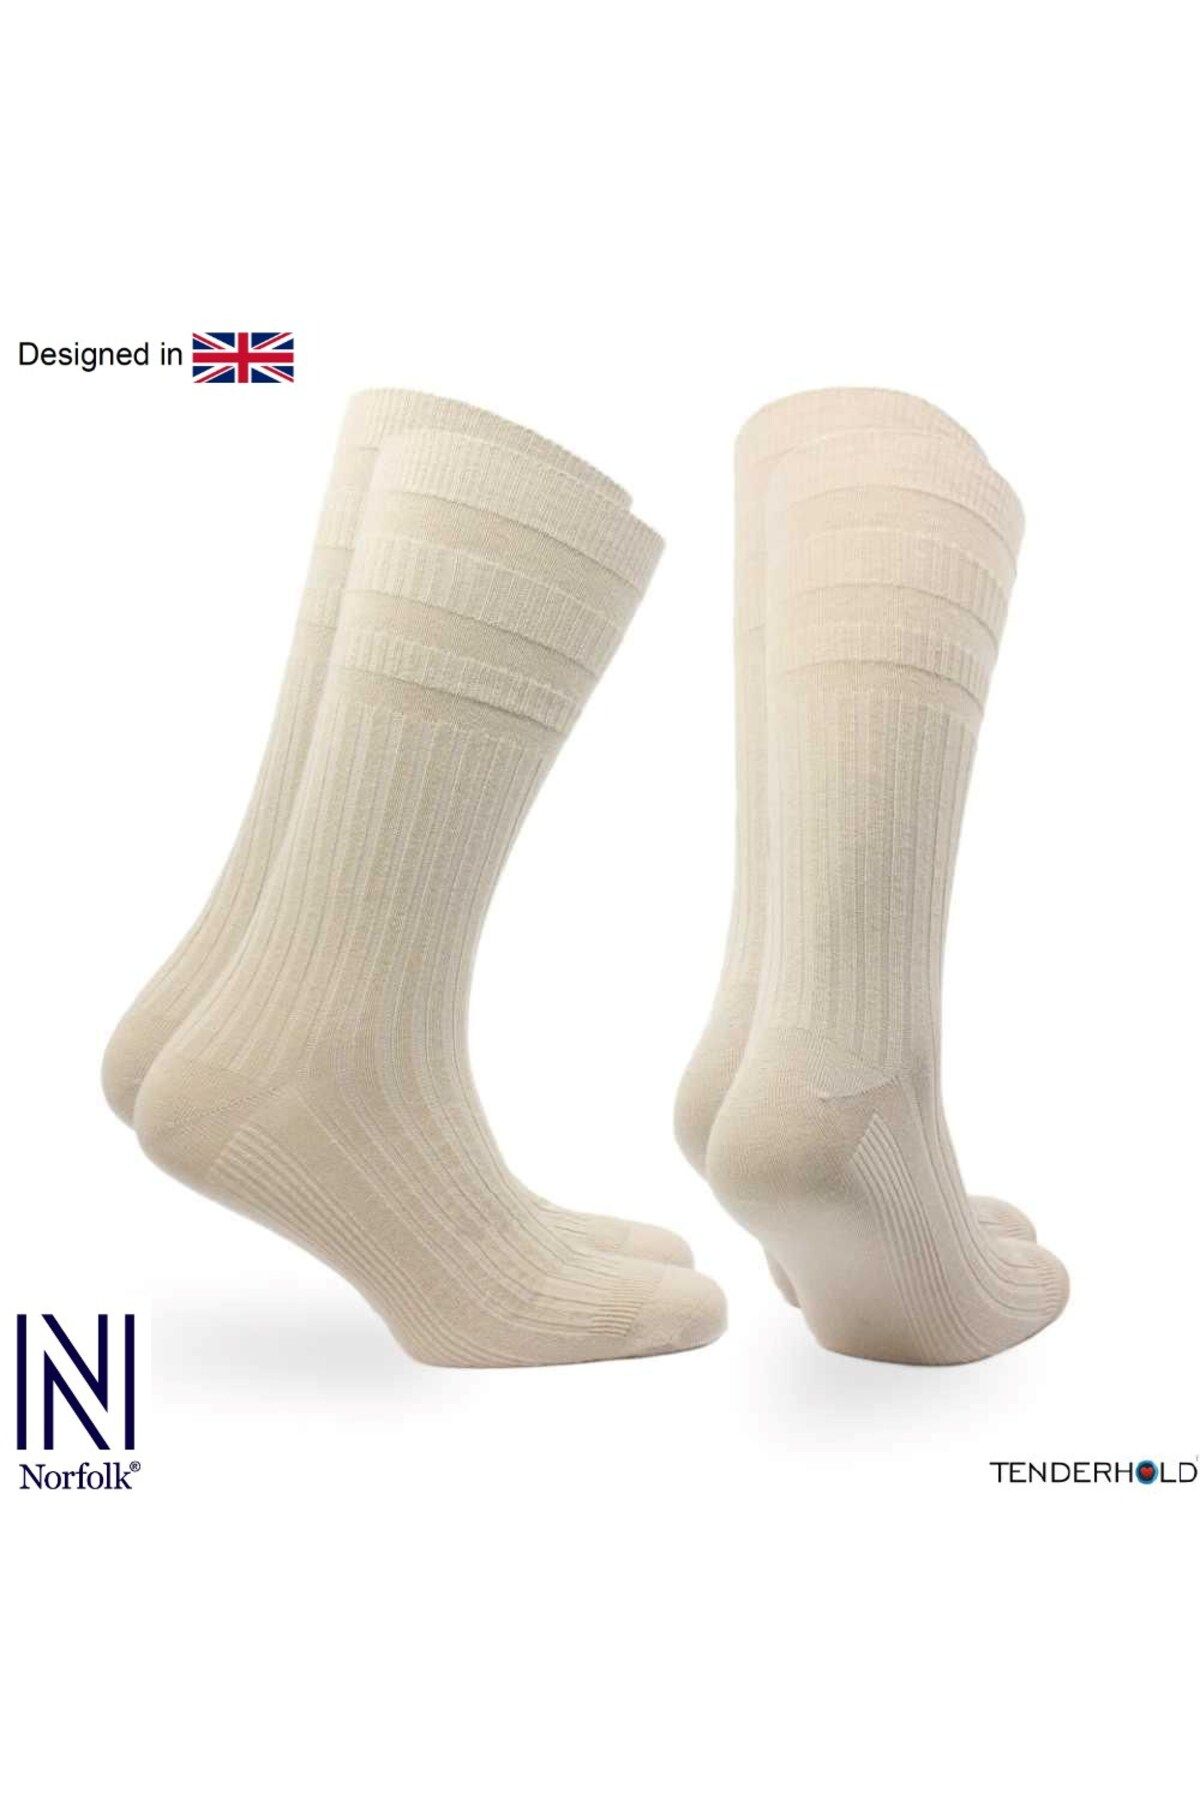 Norfolk JOSEPH Comfort Fit Tenderhold Pamuklu Diyabet Çorabı 2'li Paket